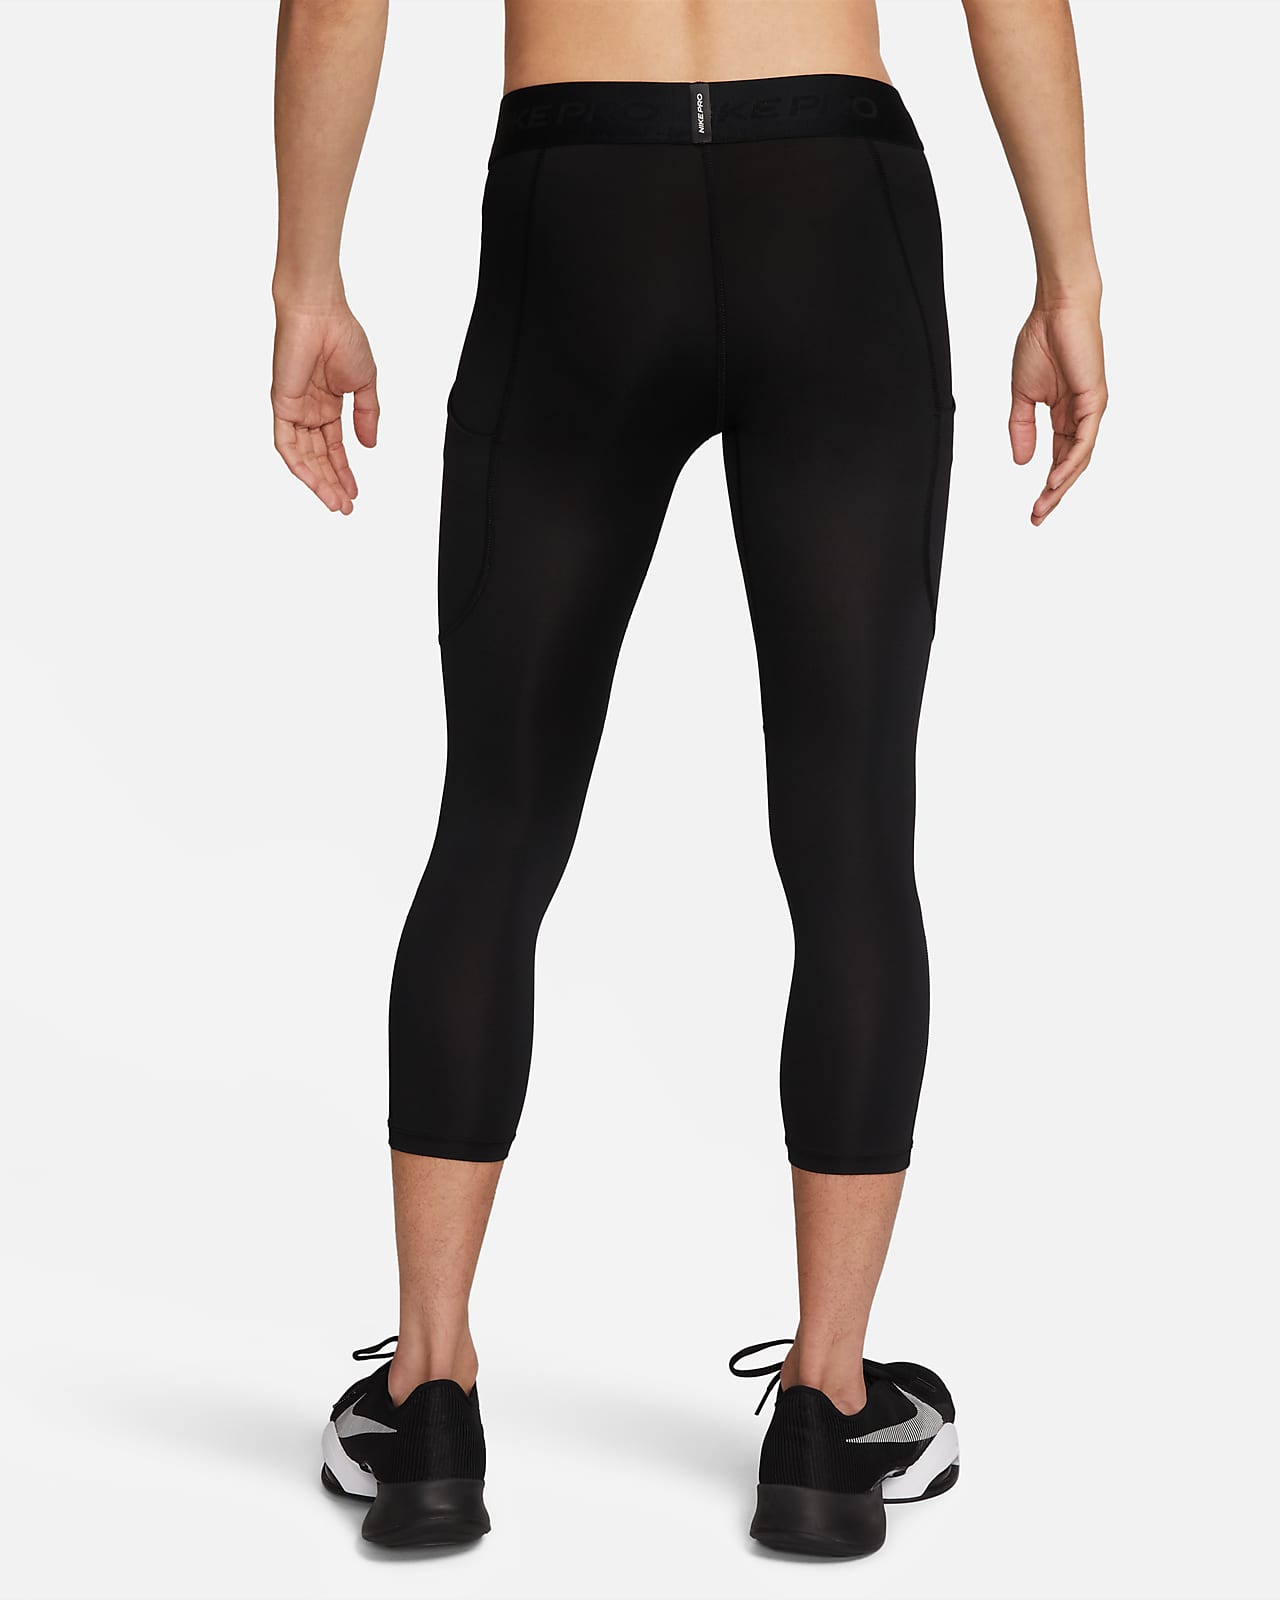 Scarp gelijktijdig abstract Nike Pro Men's Dri-FIT 3/4-Length Fitness Tights. Nike JP